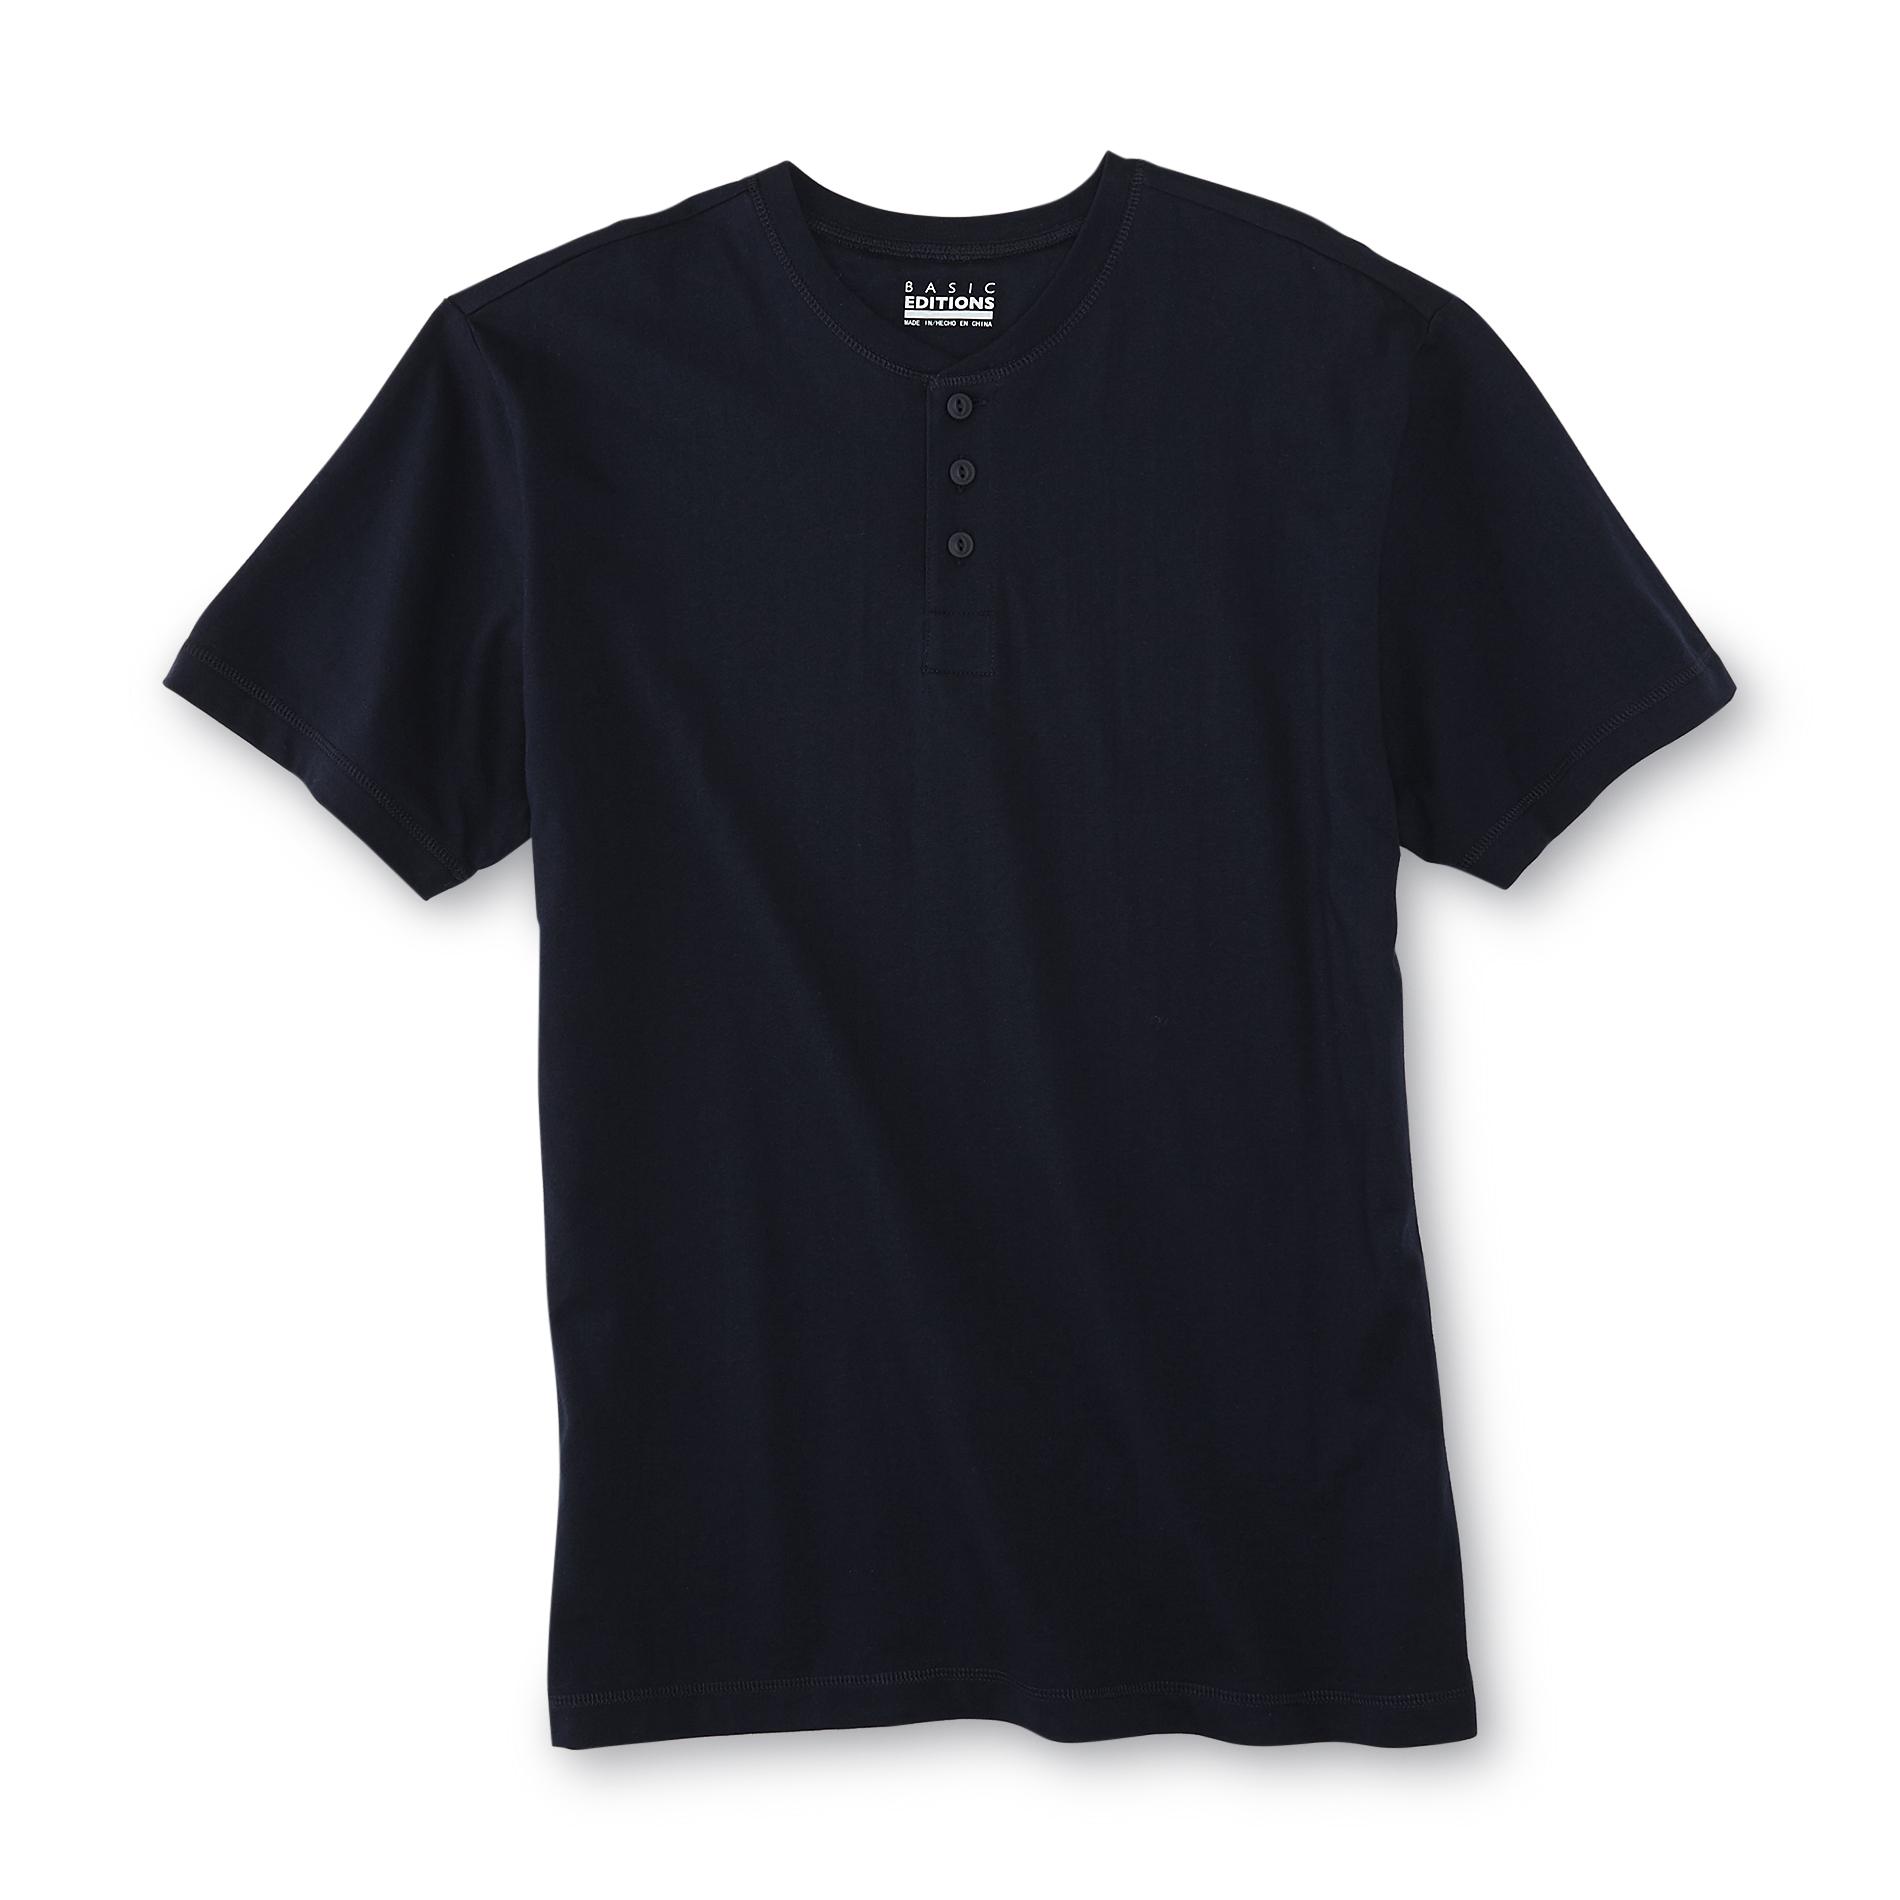 Basic Editions Men's Henley Shirt